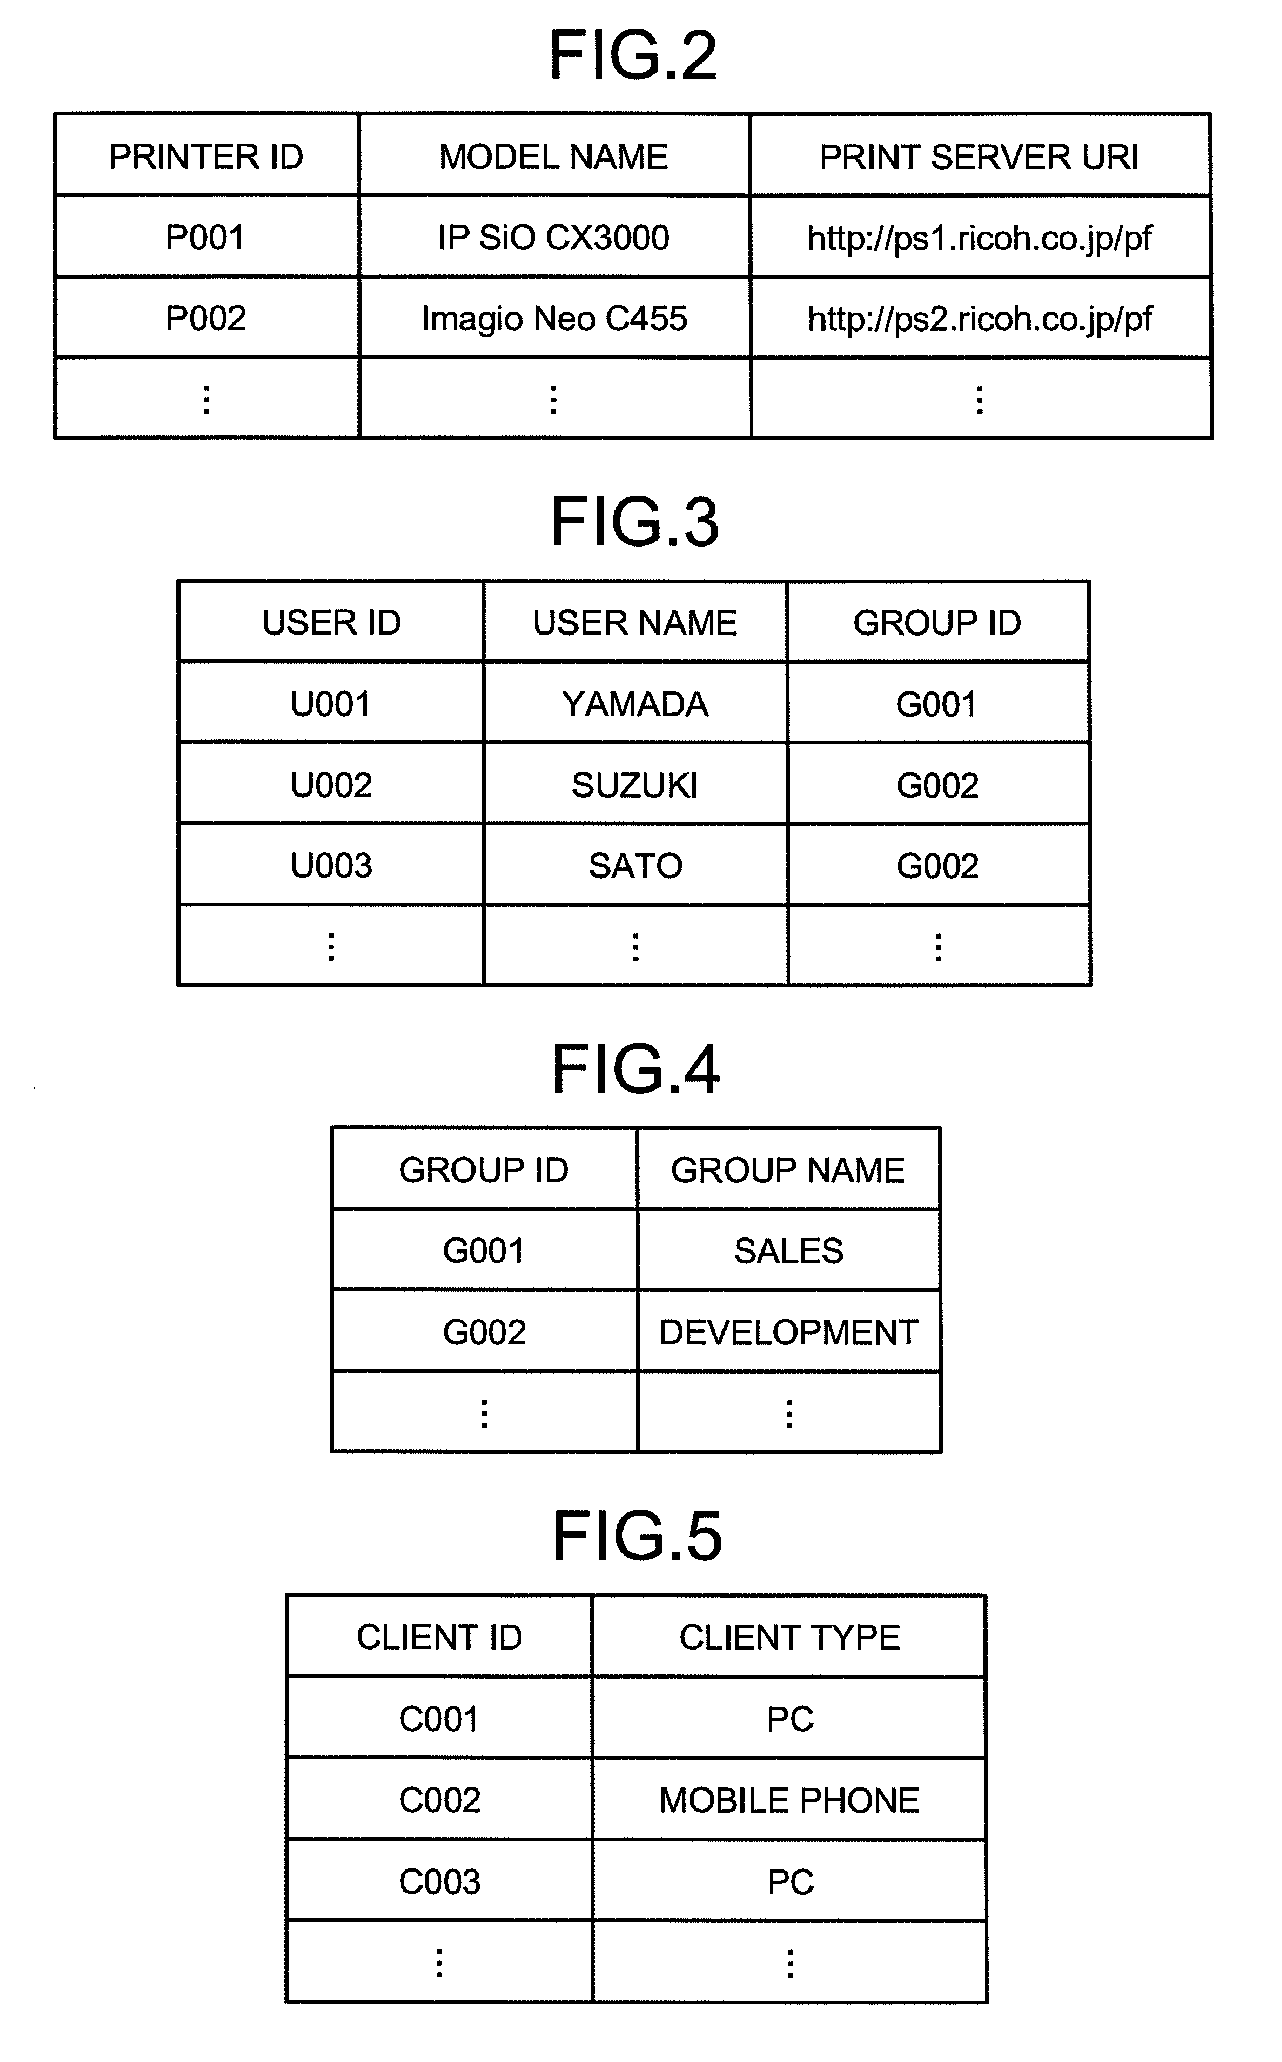 Print-item setting server apparatus, print-item setting method, and computer program product